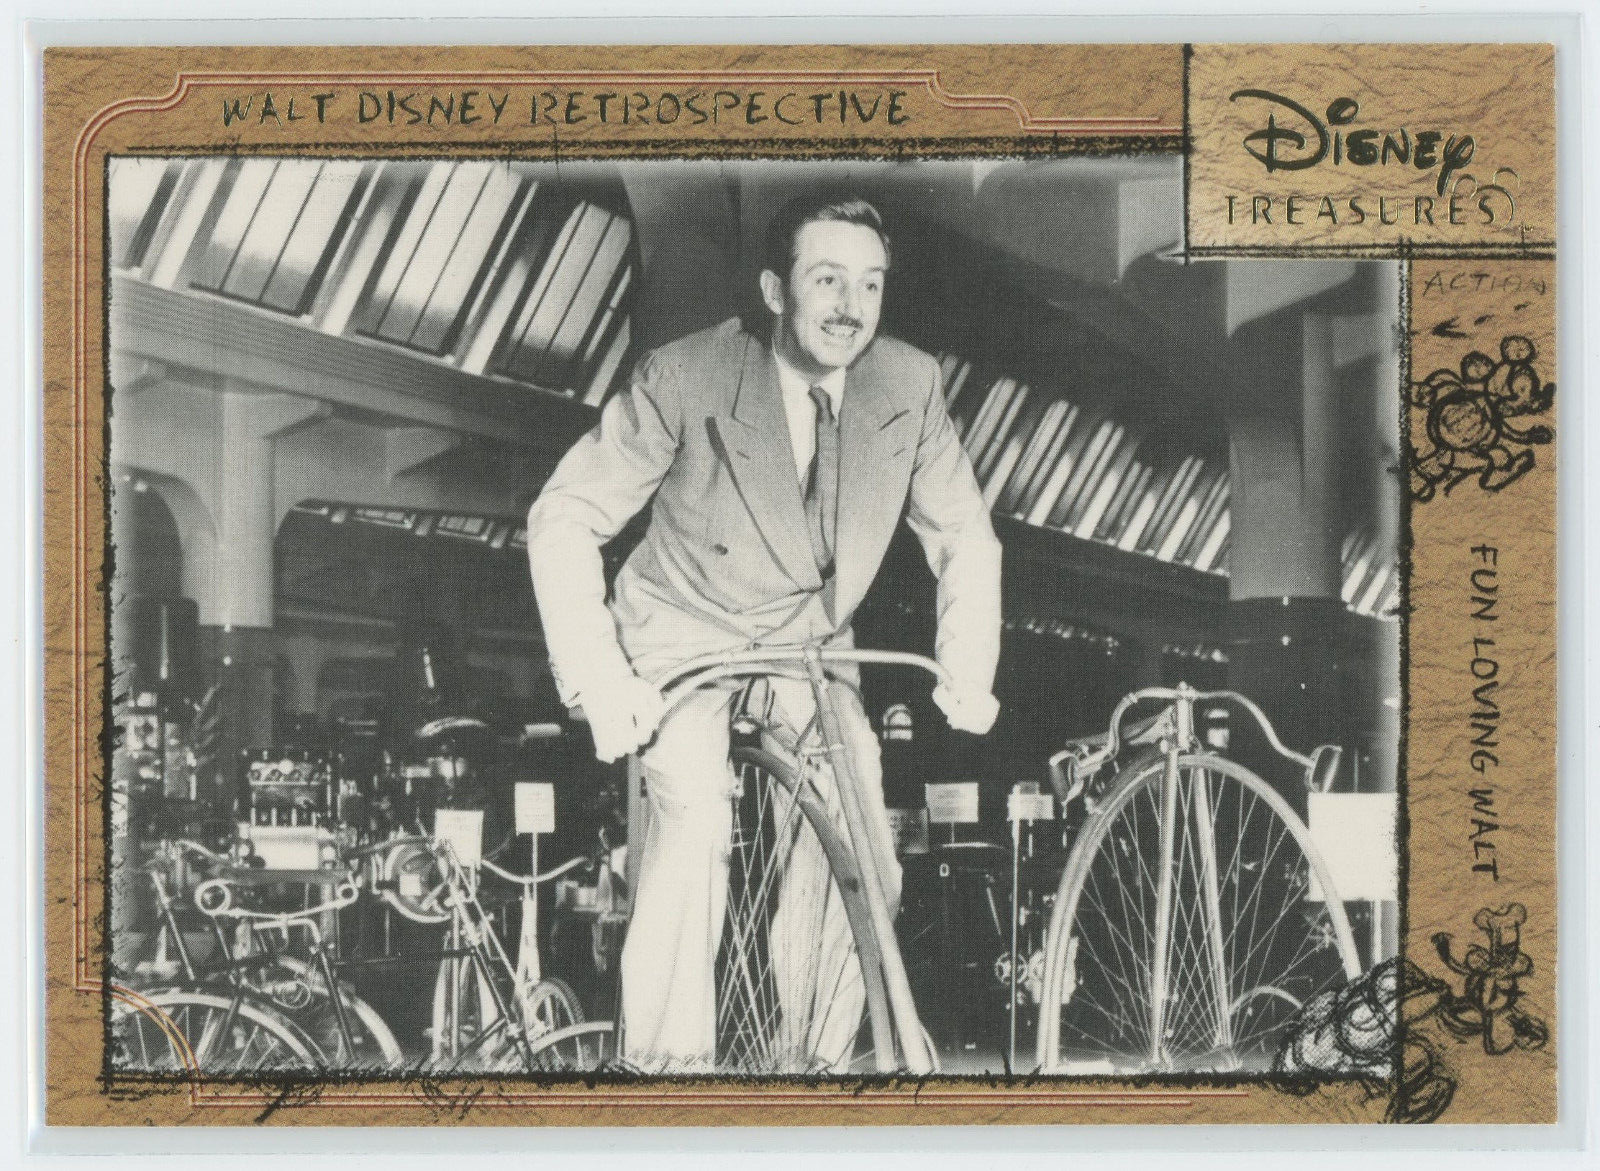 2003 UD Walt Disney Treasures #WD1 Fun Loving Walt Disney Retrospective Set Card